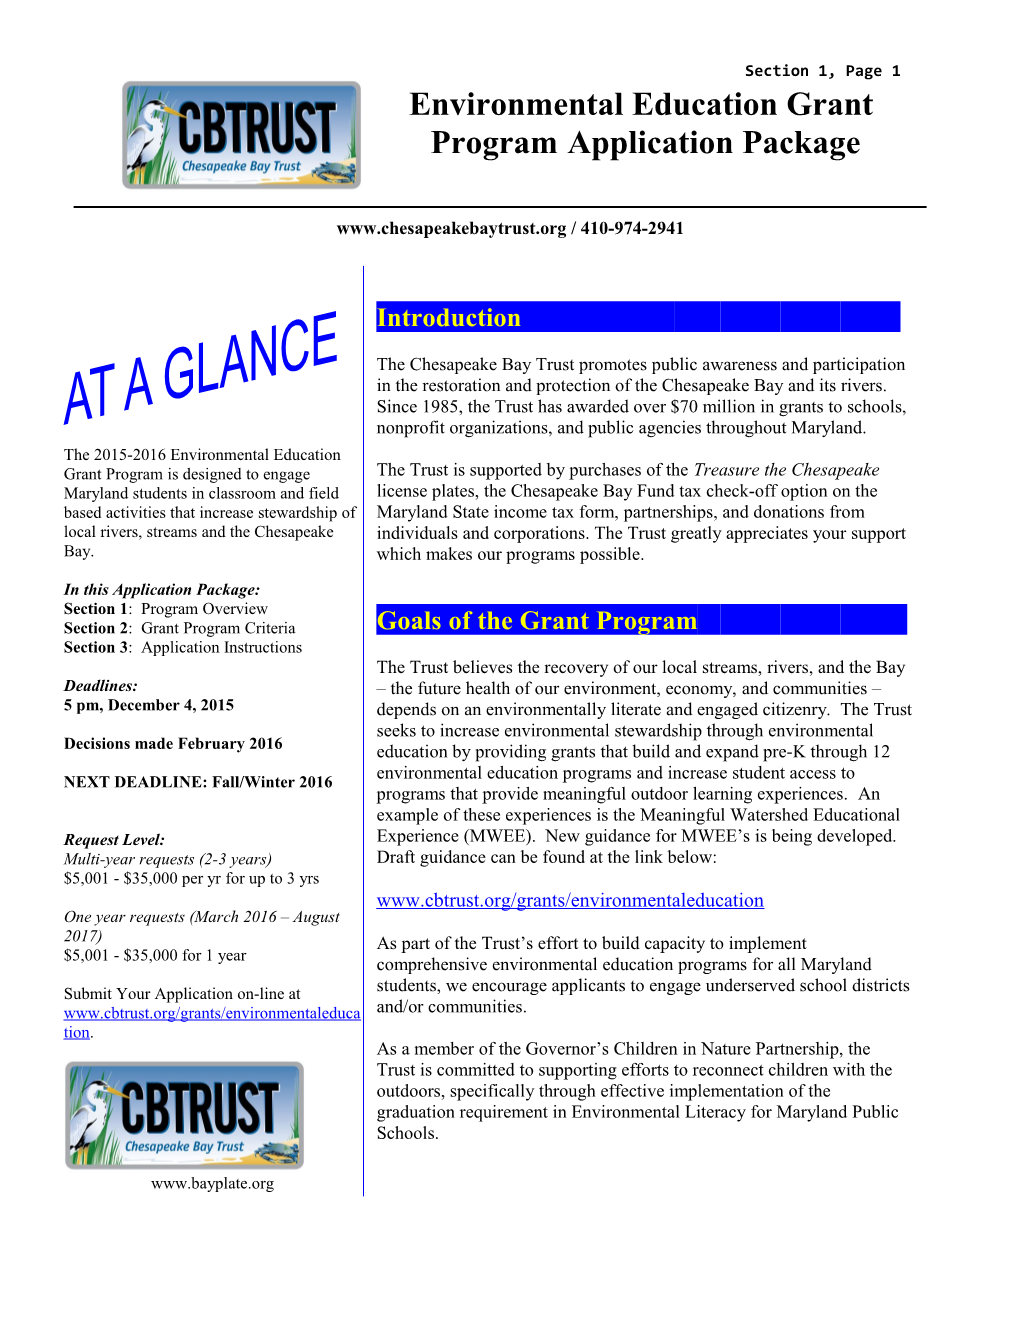 2007/2008 Environmental Education Grants Program Application Instructions